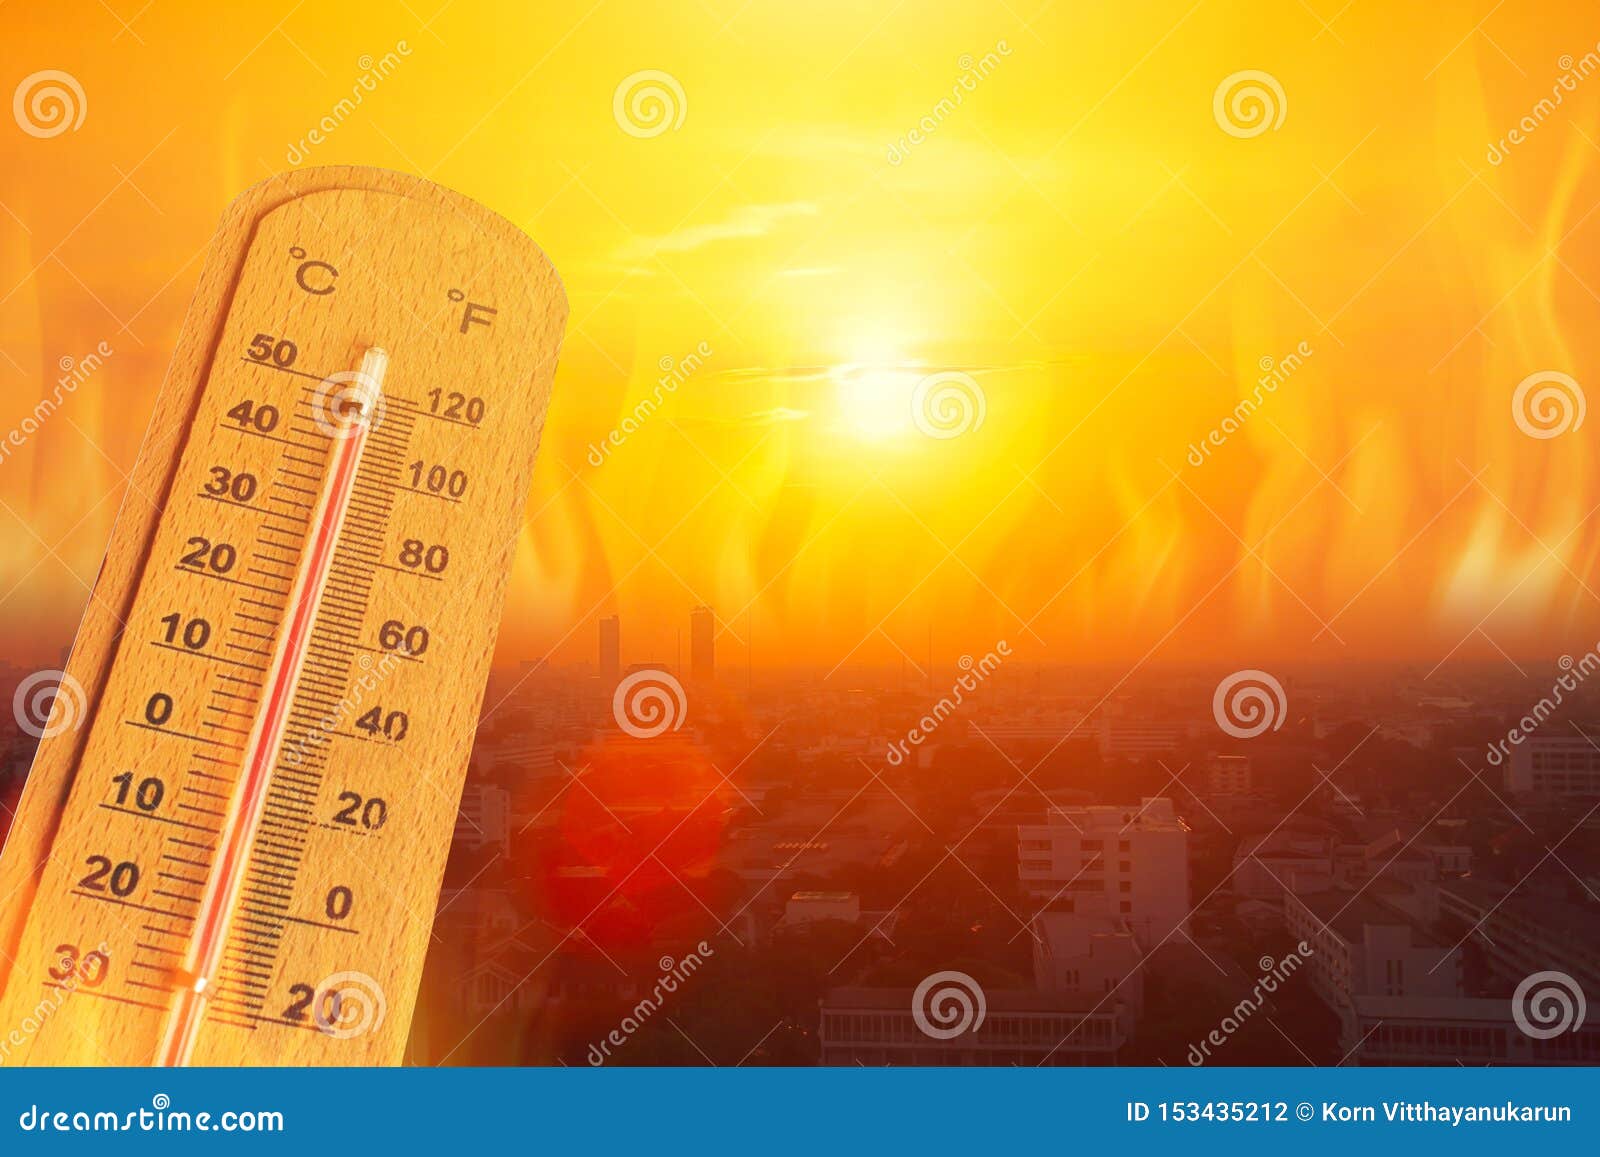 Global Warming High Temperature City Heat Wave in Summer Season ...